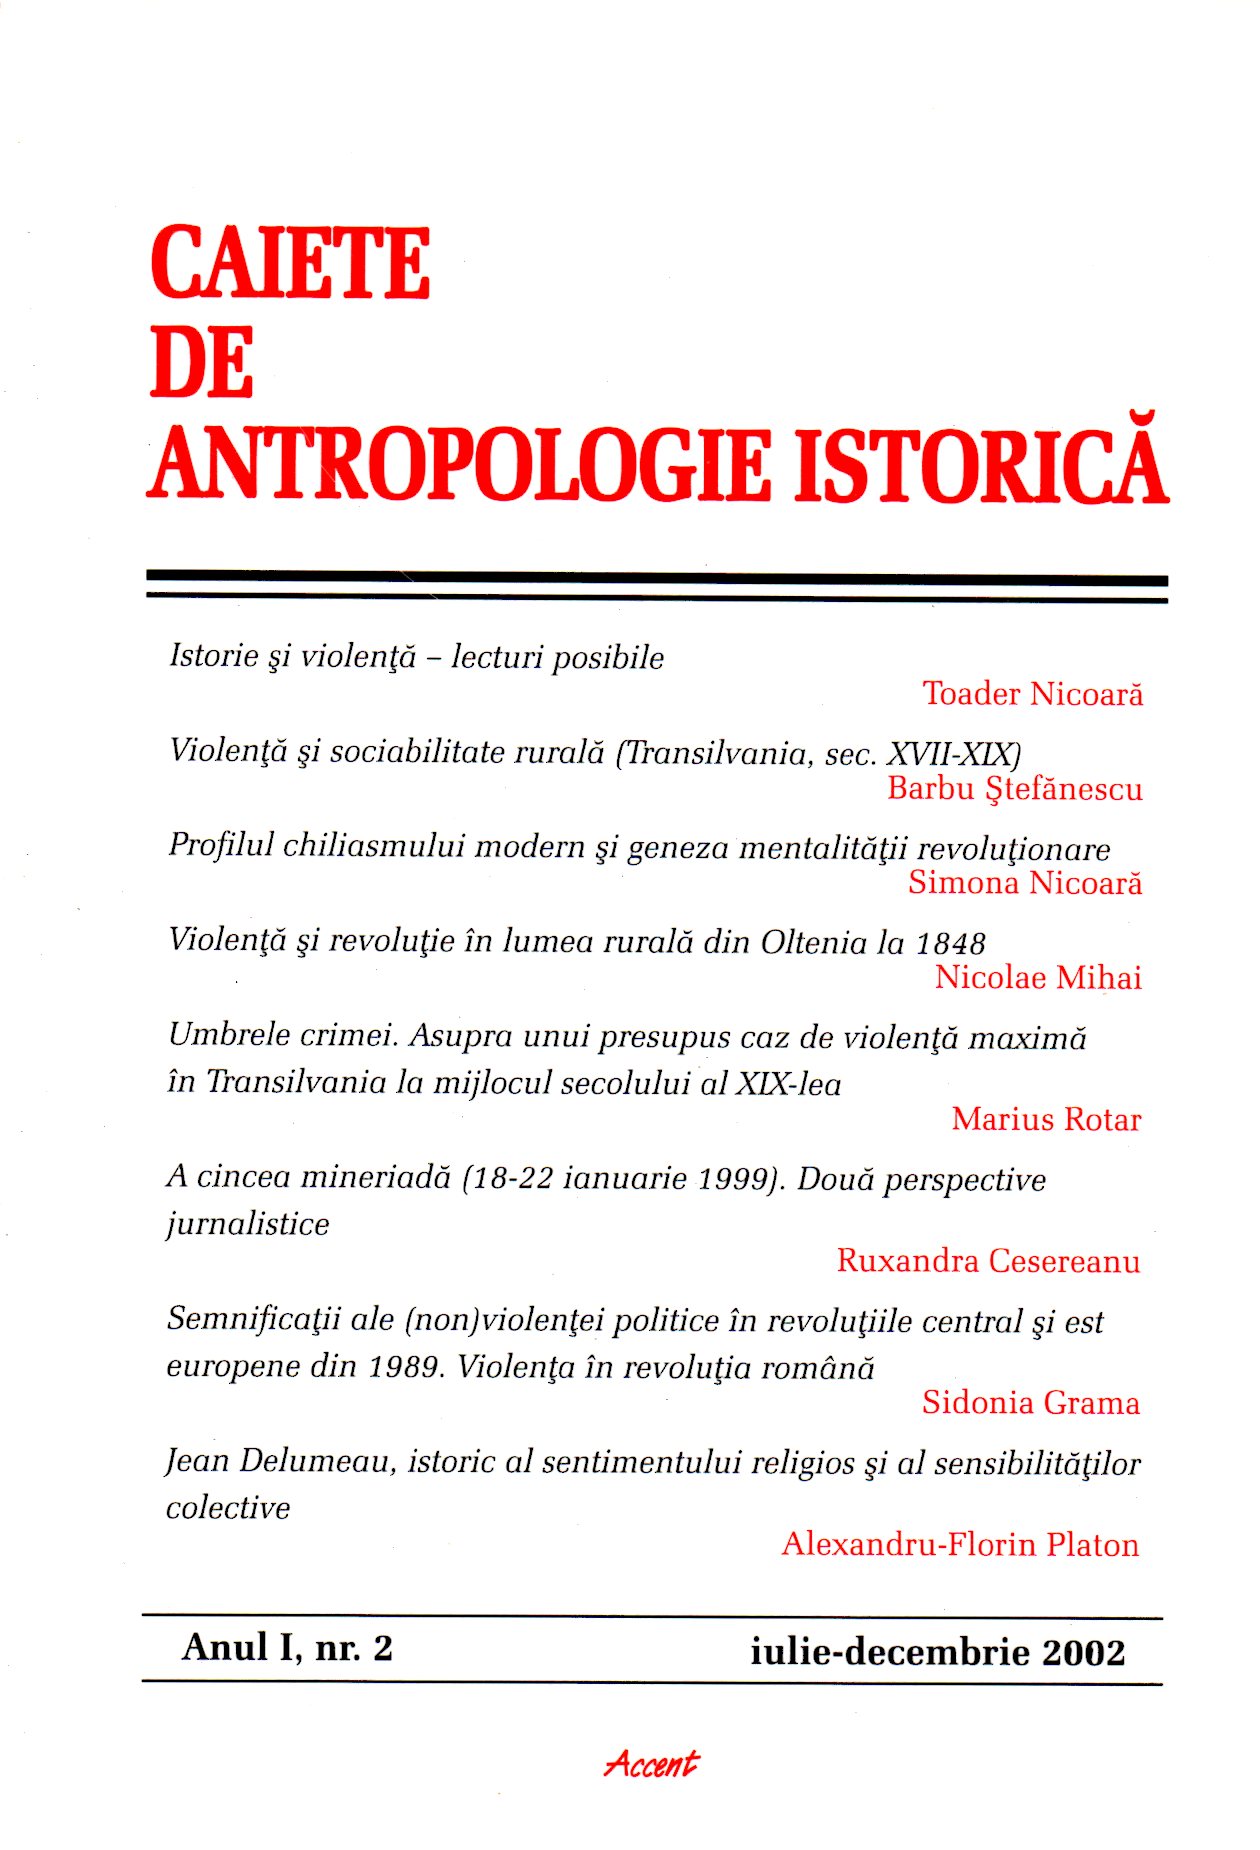 Miroslav Jovanović, Karl Kaser, Slobodan Naumović (Eds.), Between the Archives and the Field: A Dialogue on Historical Anthropology of the Balkans, Belgrad-Graz, 1999